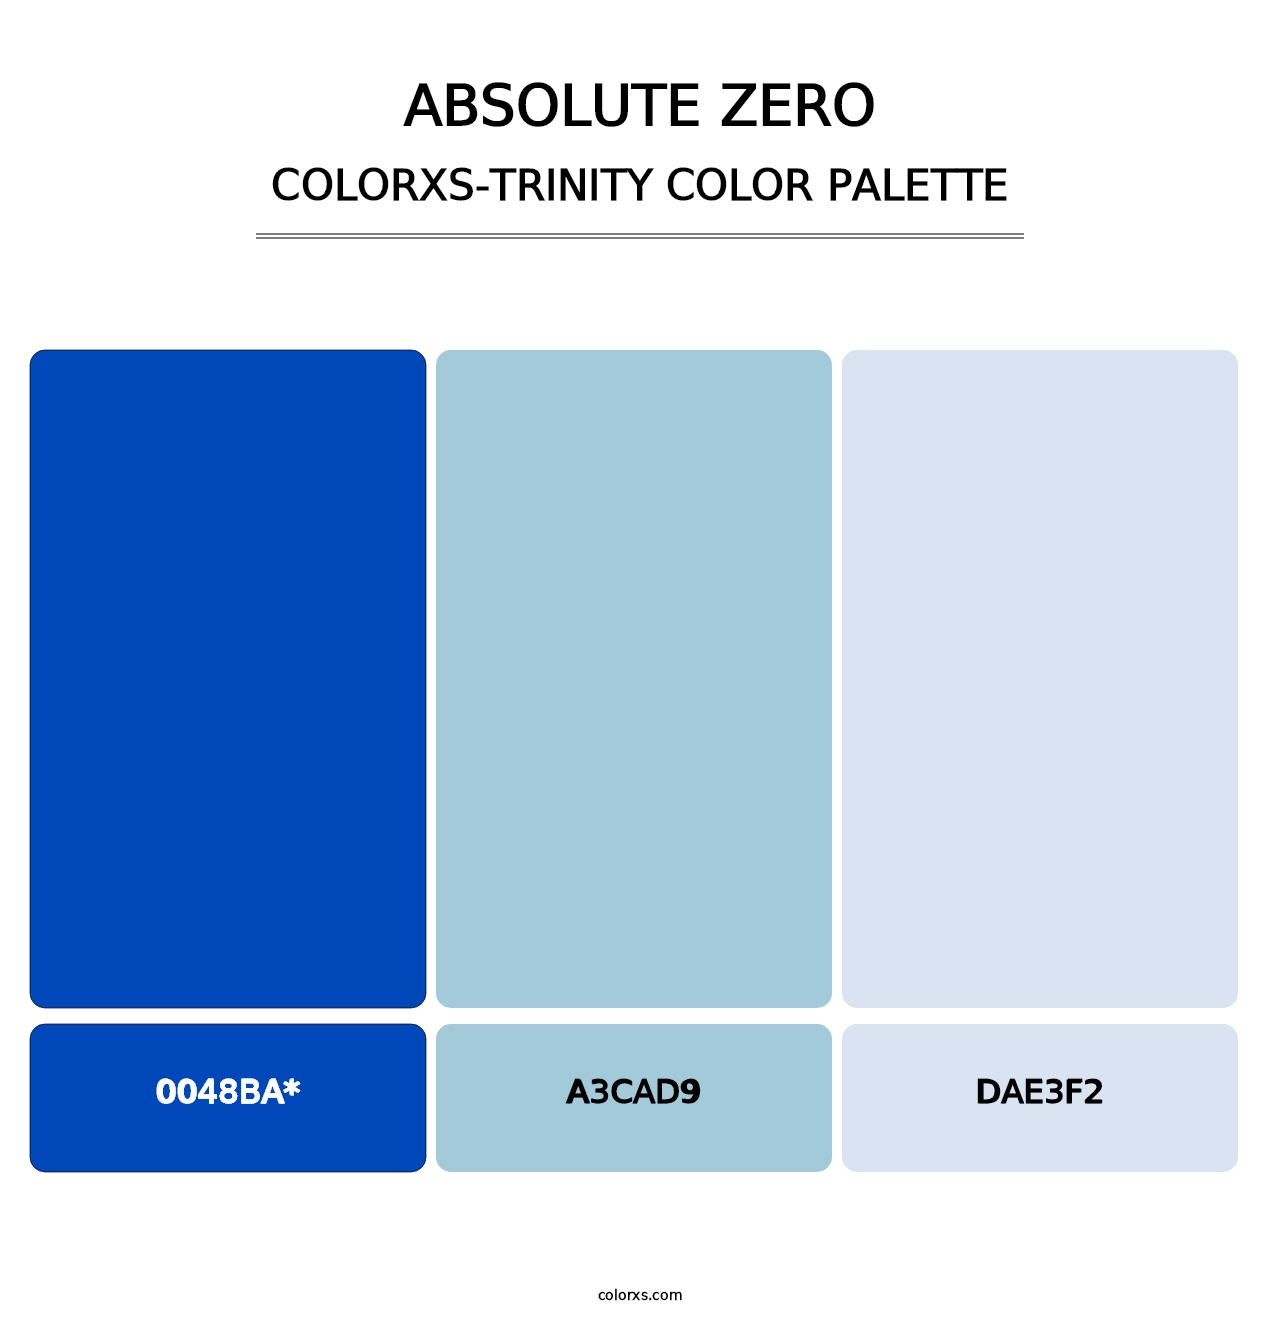 Absolute Zero - Colorxs Trinity Palette